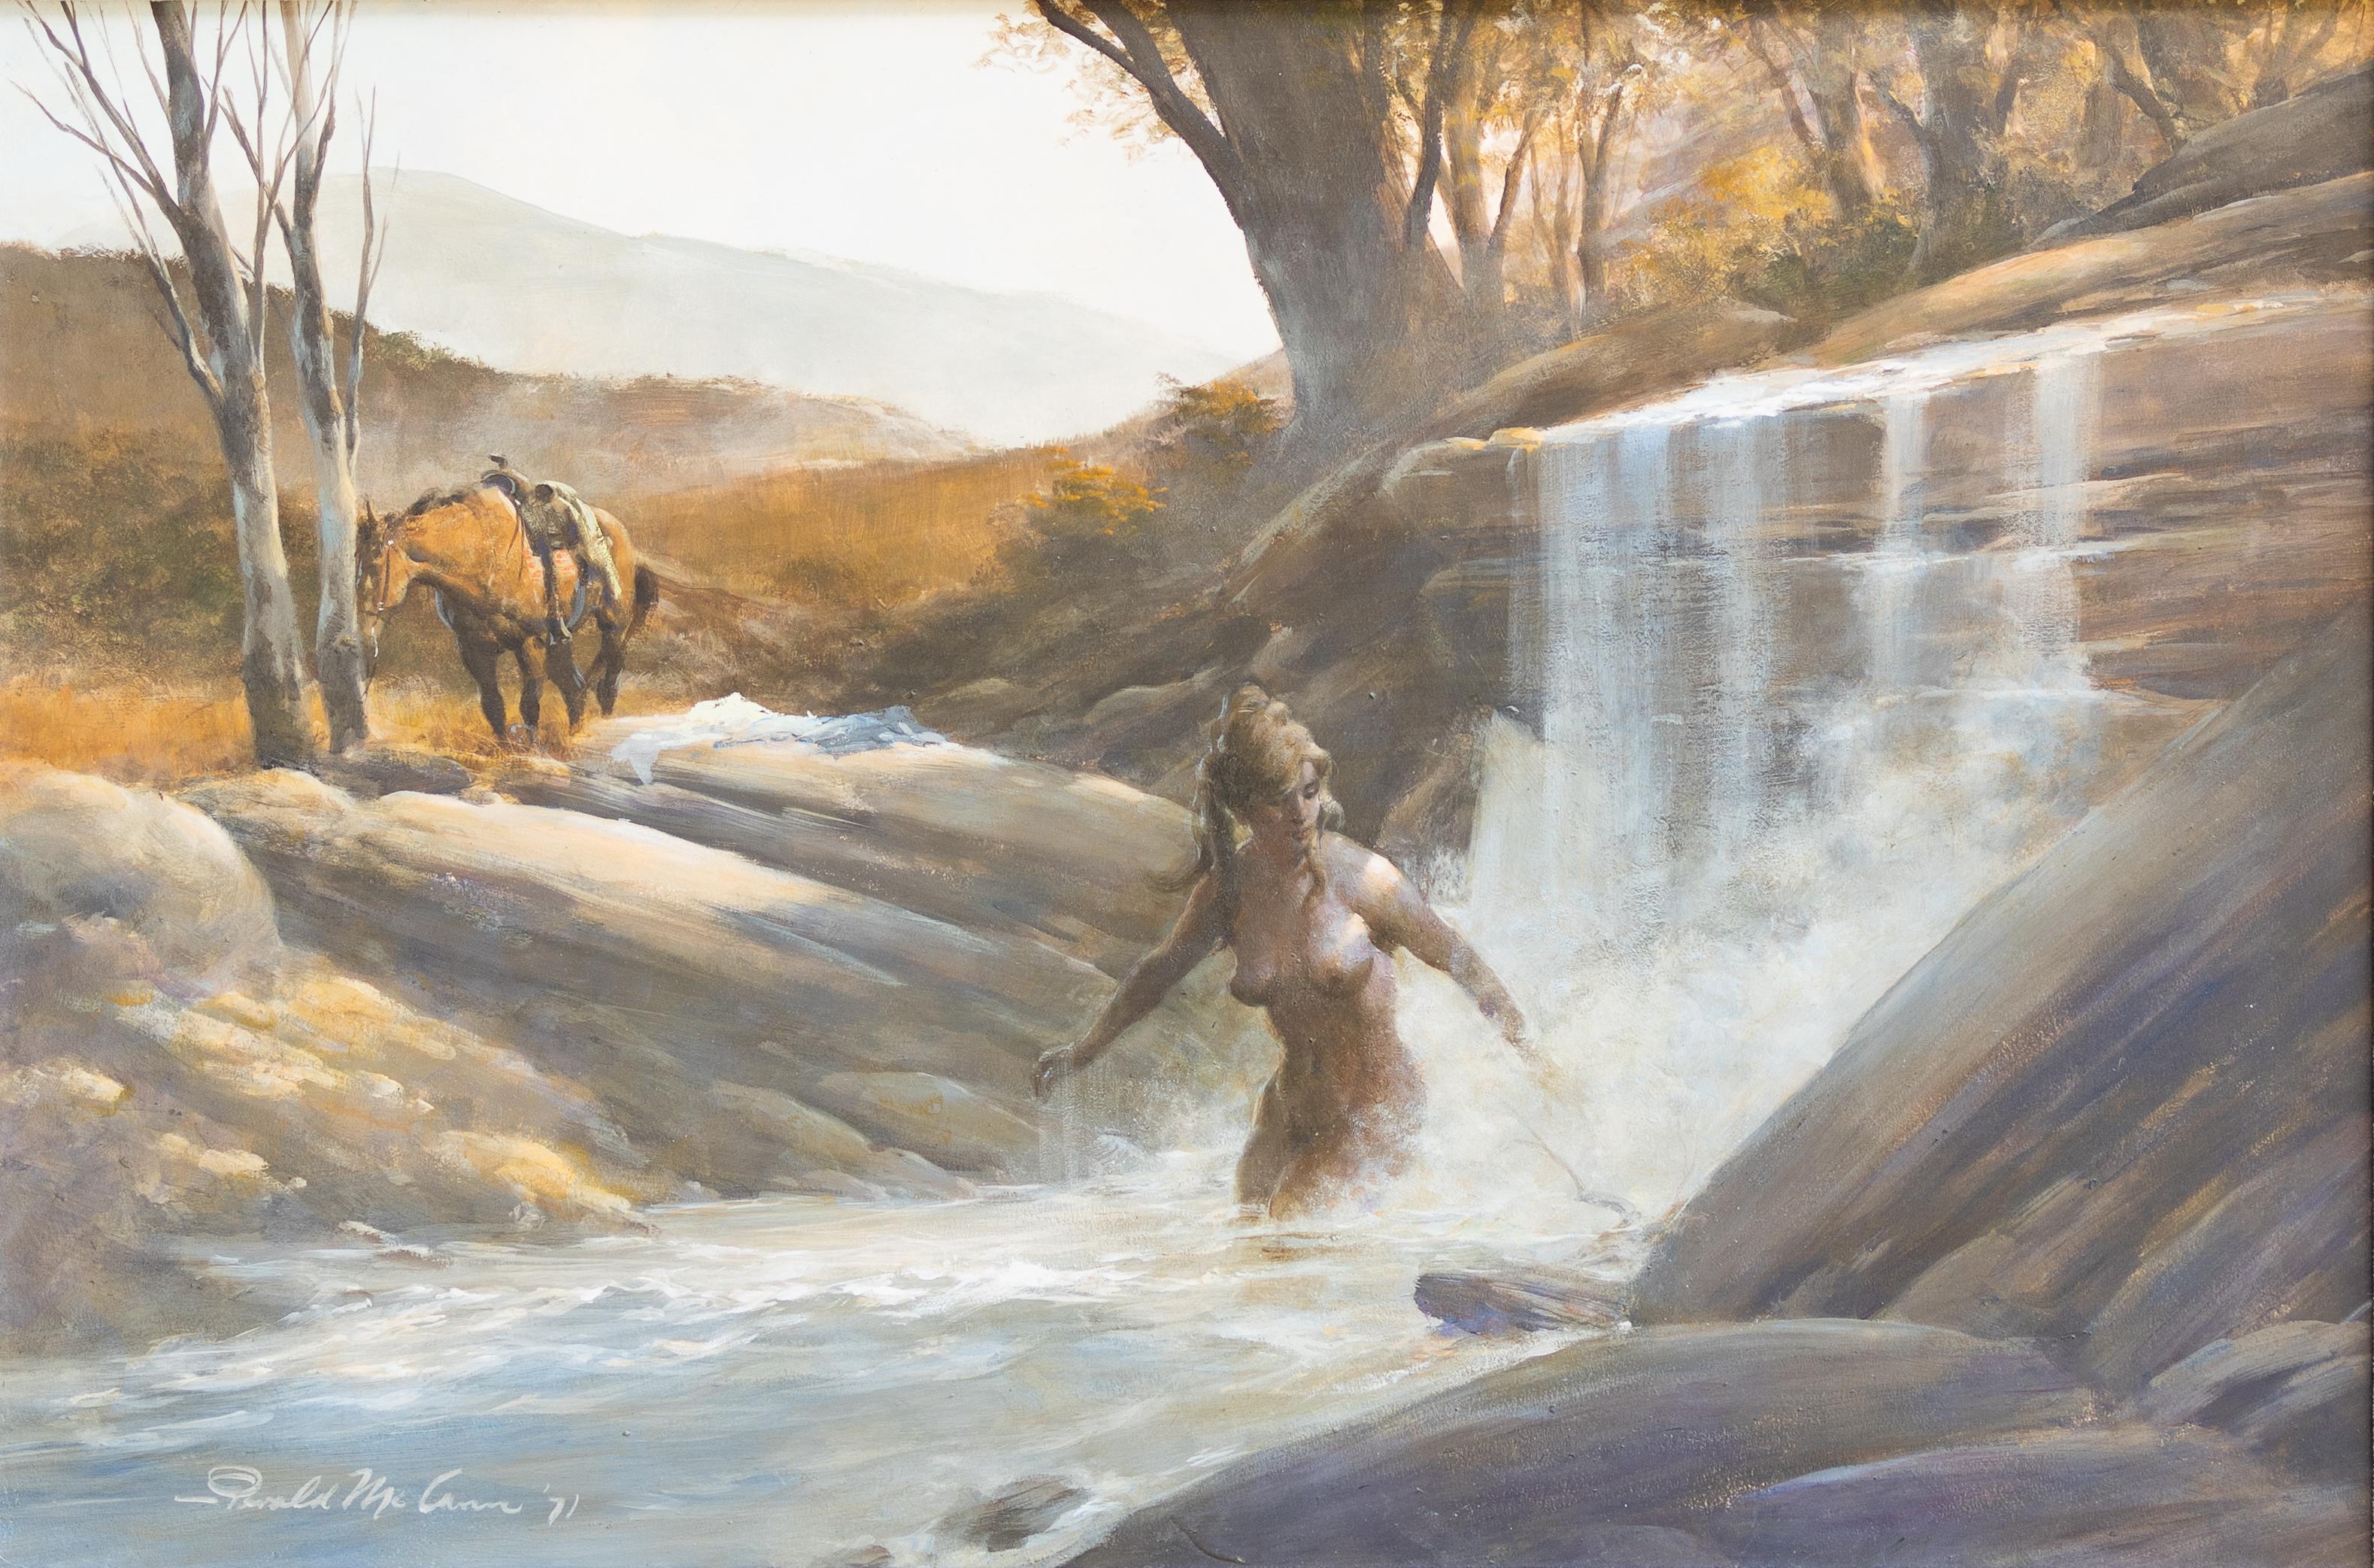 Western Scene with a Woman Bathing in a Creek